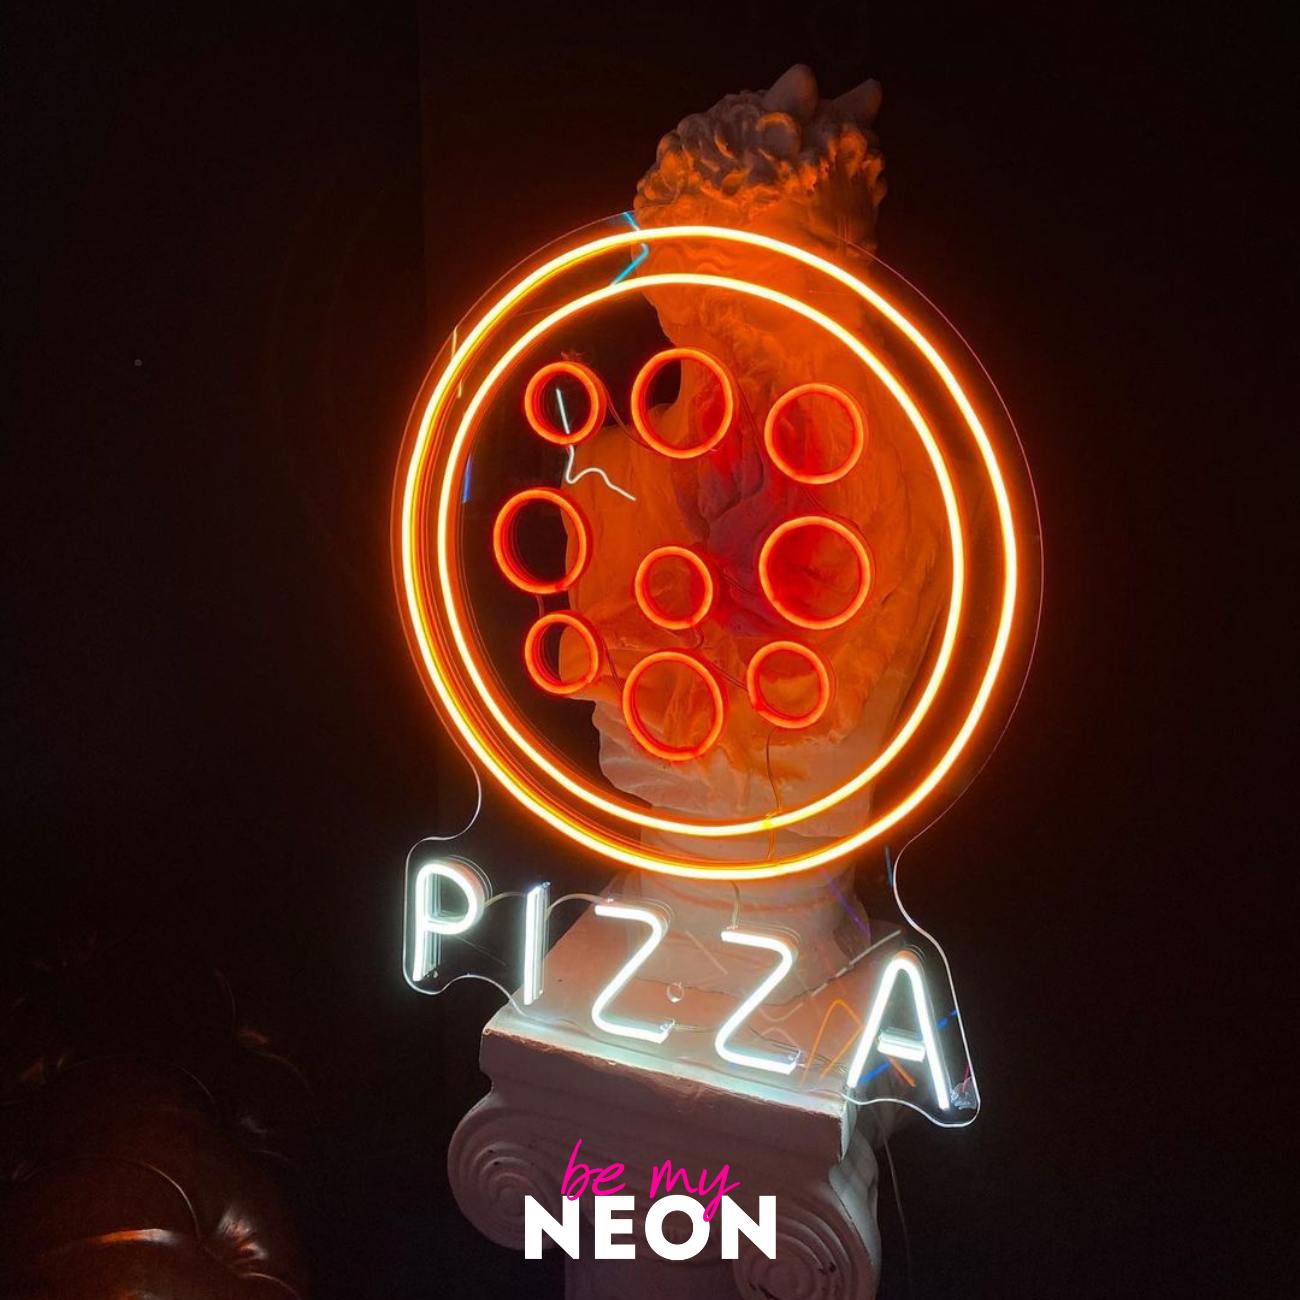 "PIZZA RUND" LED Neonschild